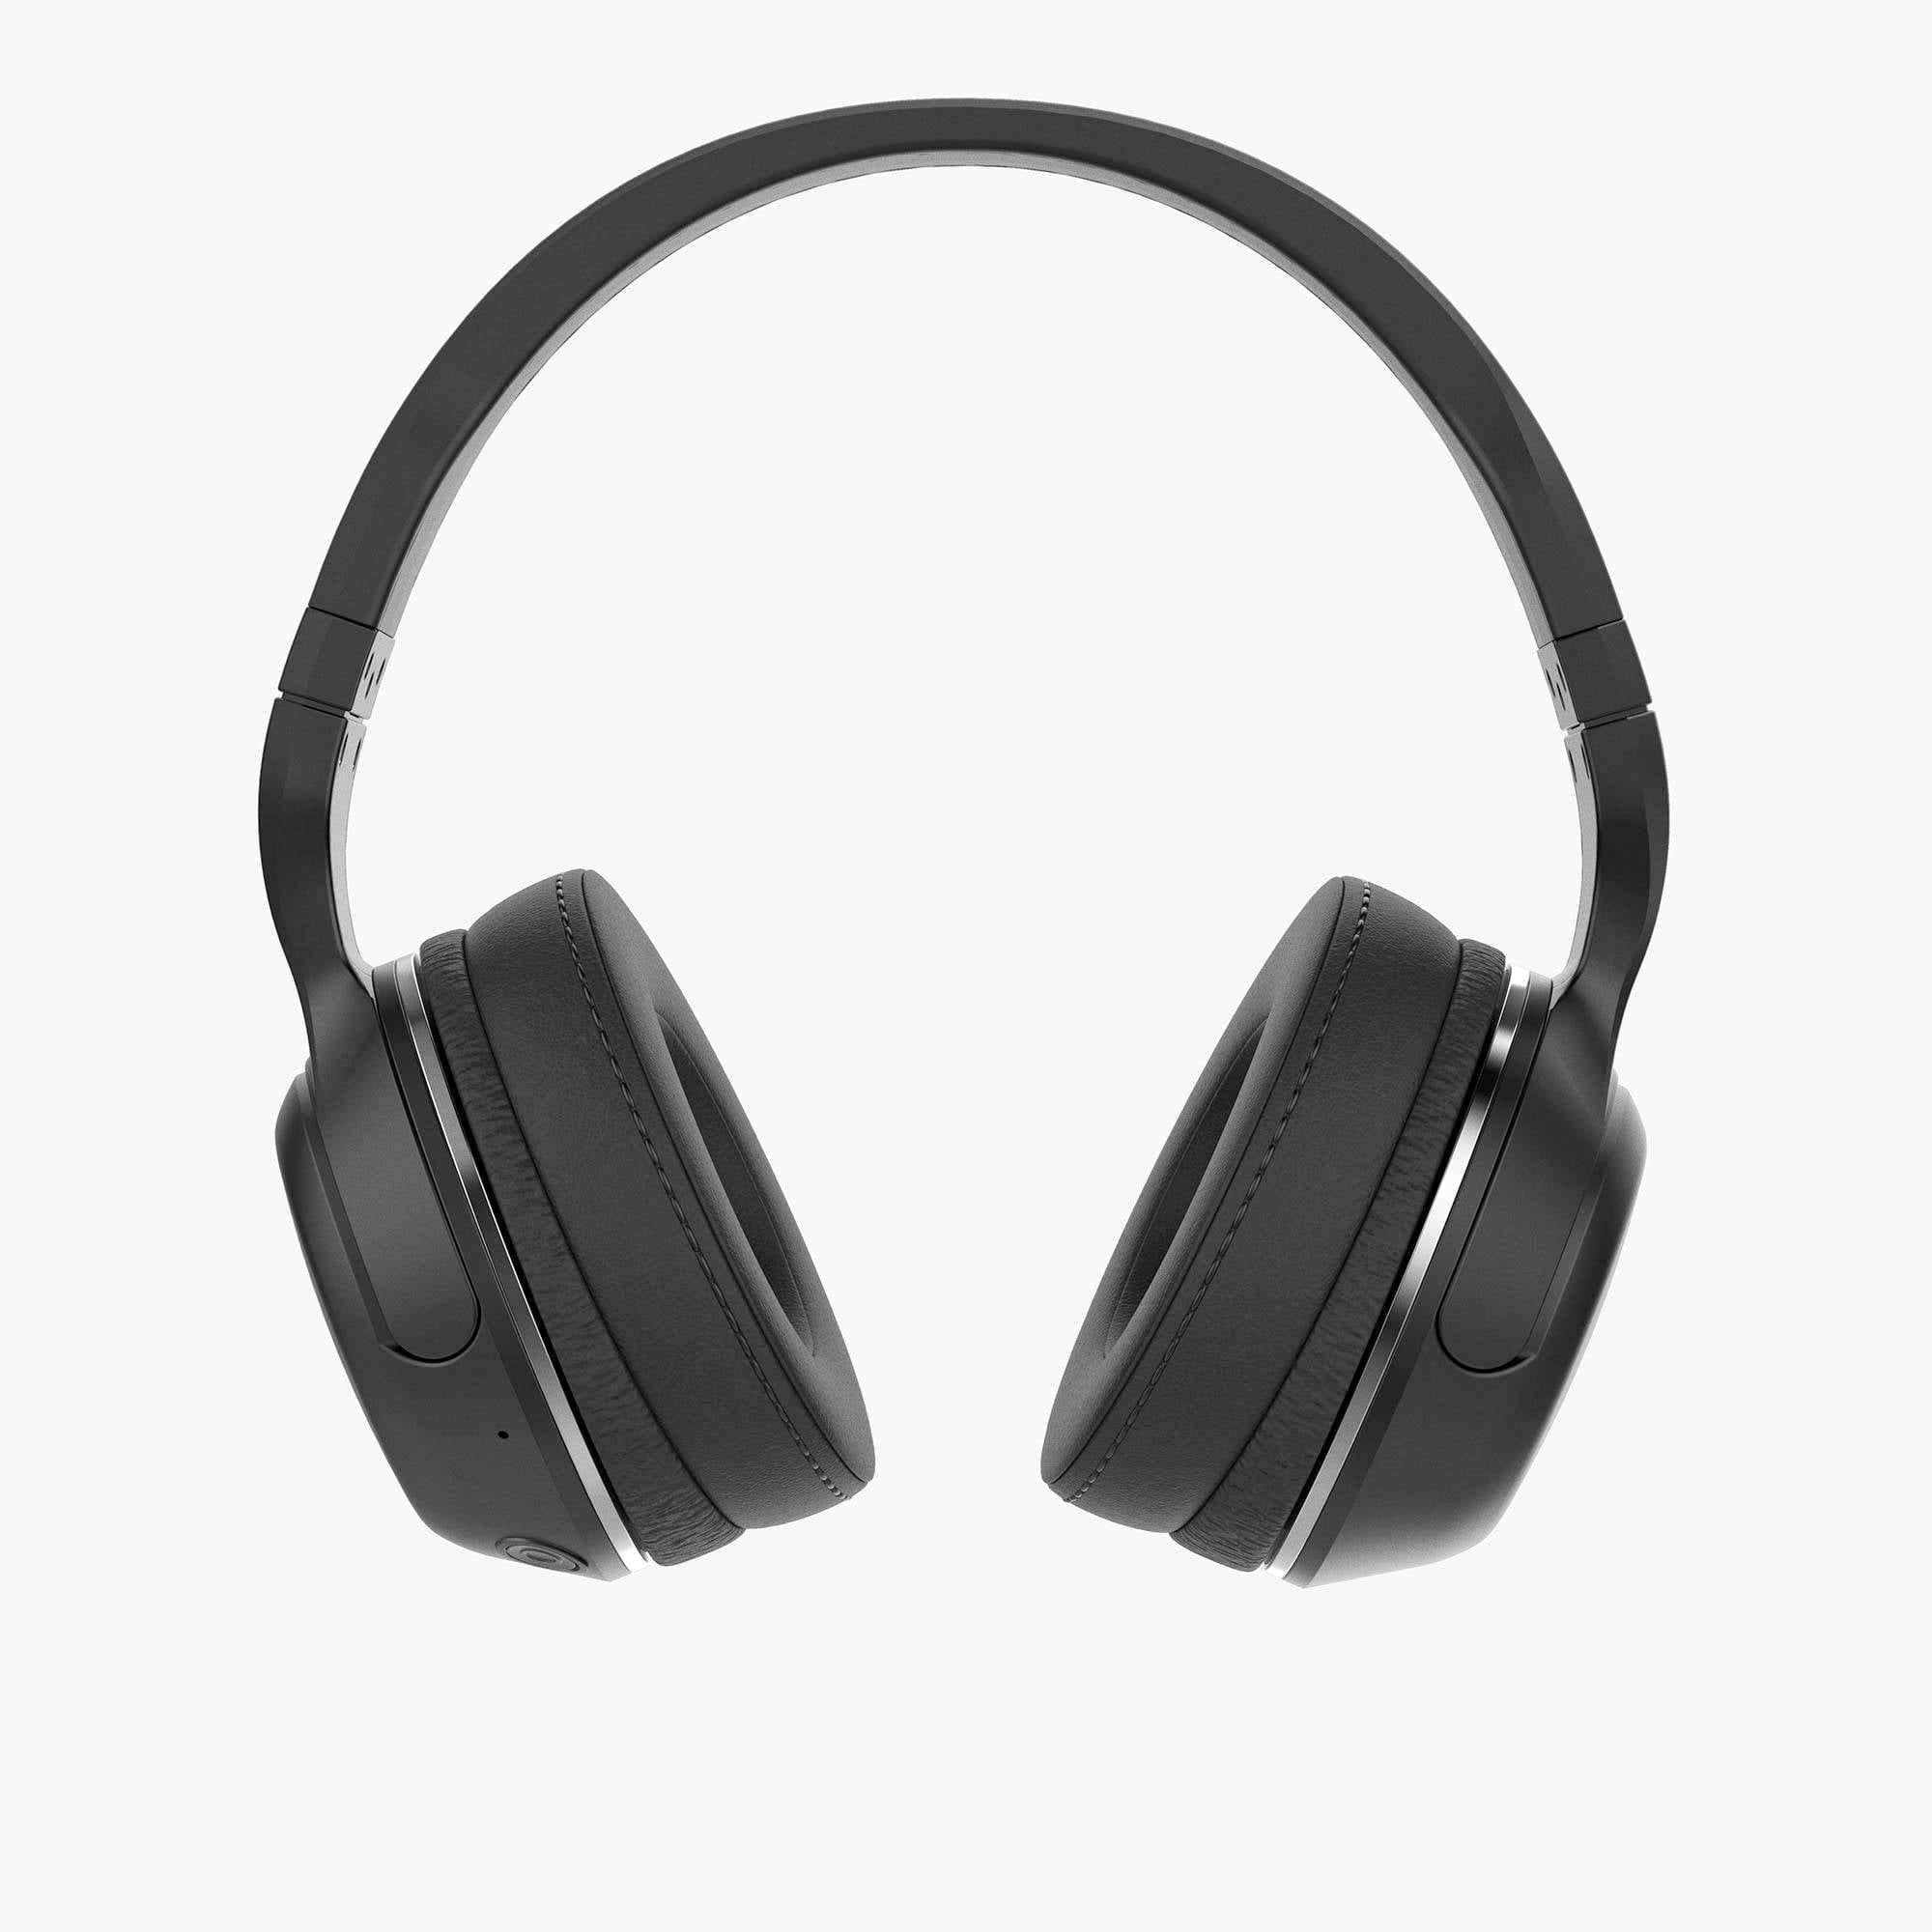 Skullcandy Hesh Bluetooth Over-Ear Headphones, Black, S6HBGY-374 Walmart.com